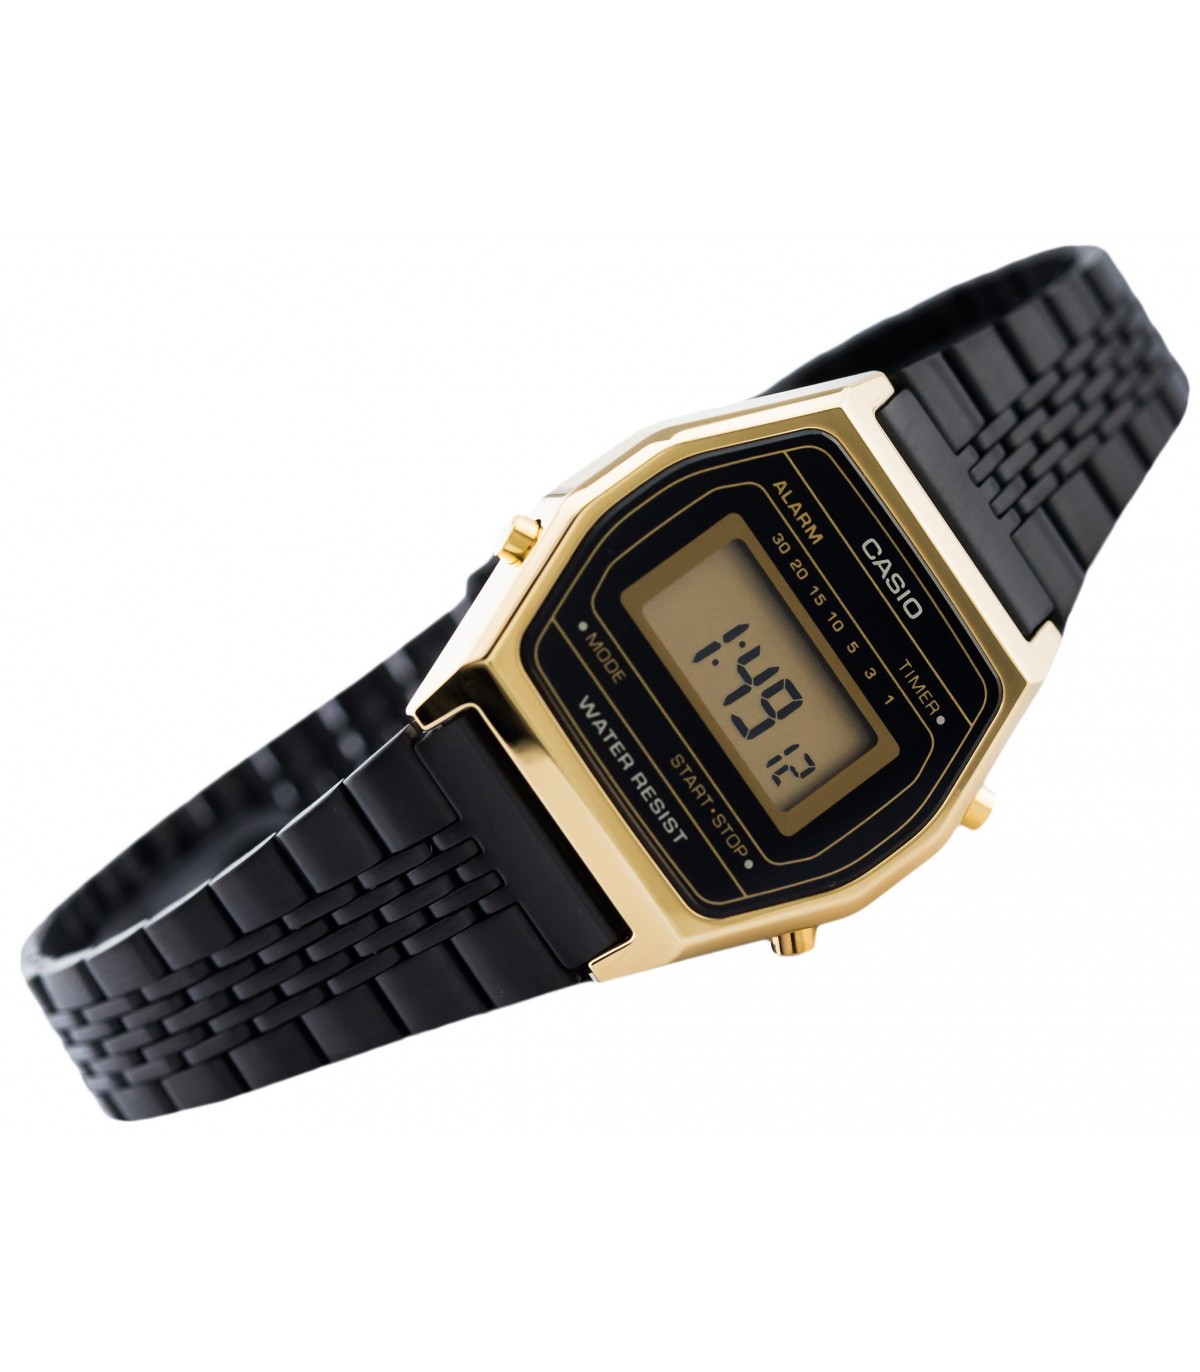 Reloj Casio dorado personalizado con correa negra/gris -  España